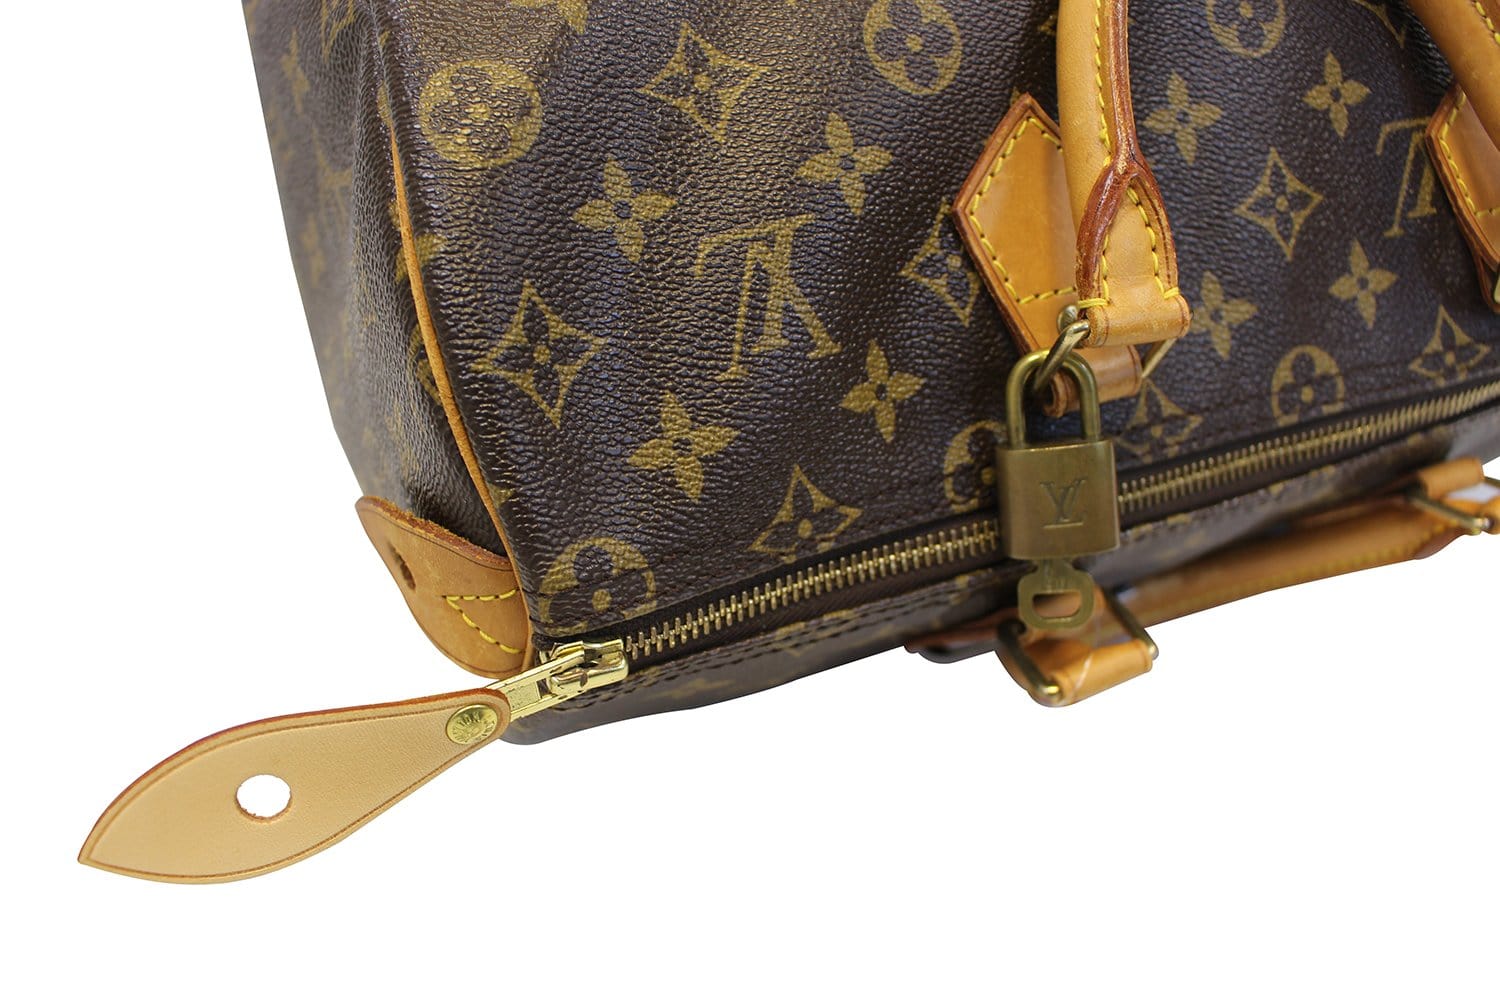 Louis Vuitton Speedy 30 Canvas Handbag (pre-owned) in Brown